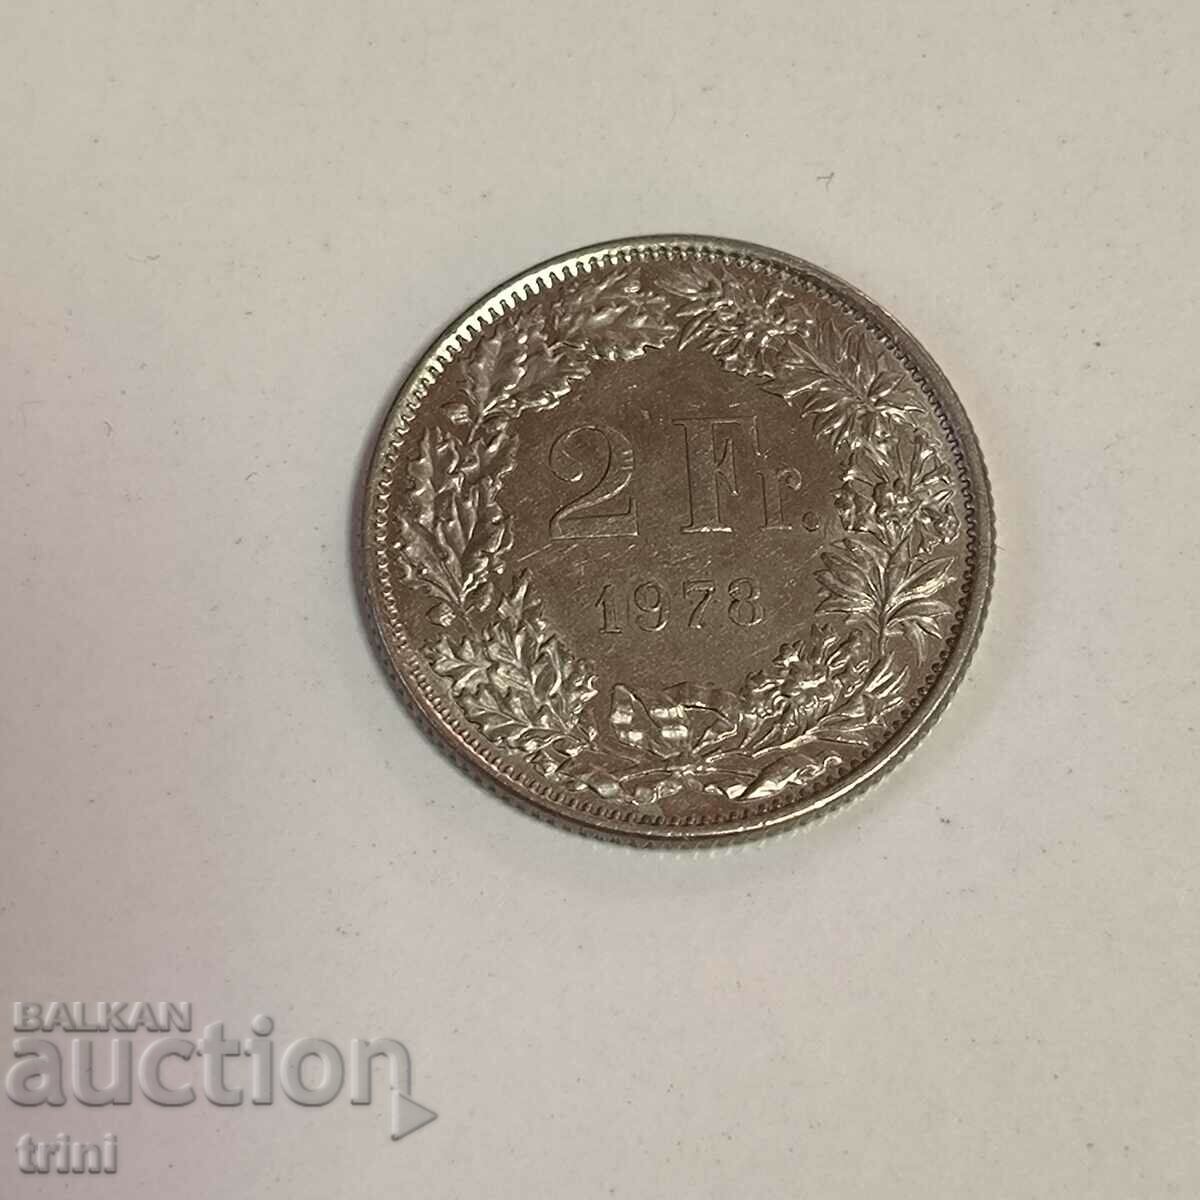 Швейцария 2 франка 1978 година ж33